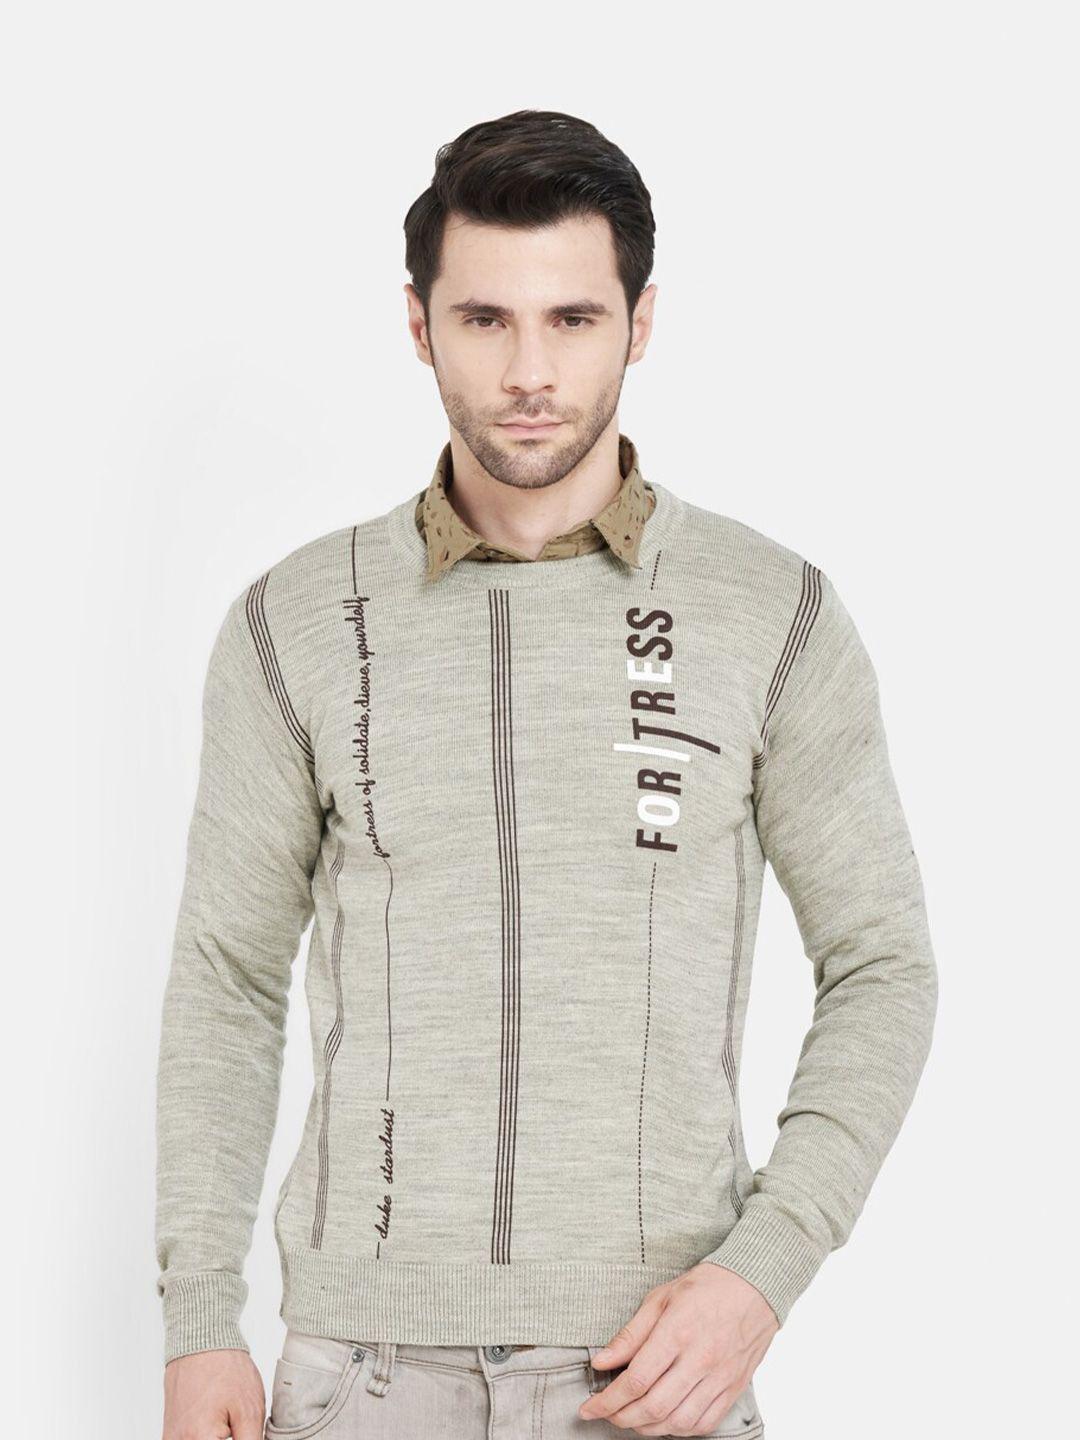 duke-men-brown-&-white-typography-printed-wool-pullover-sweater